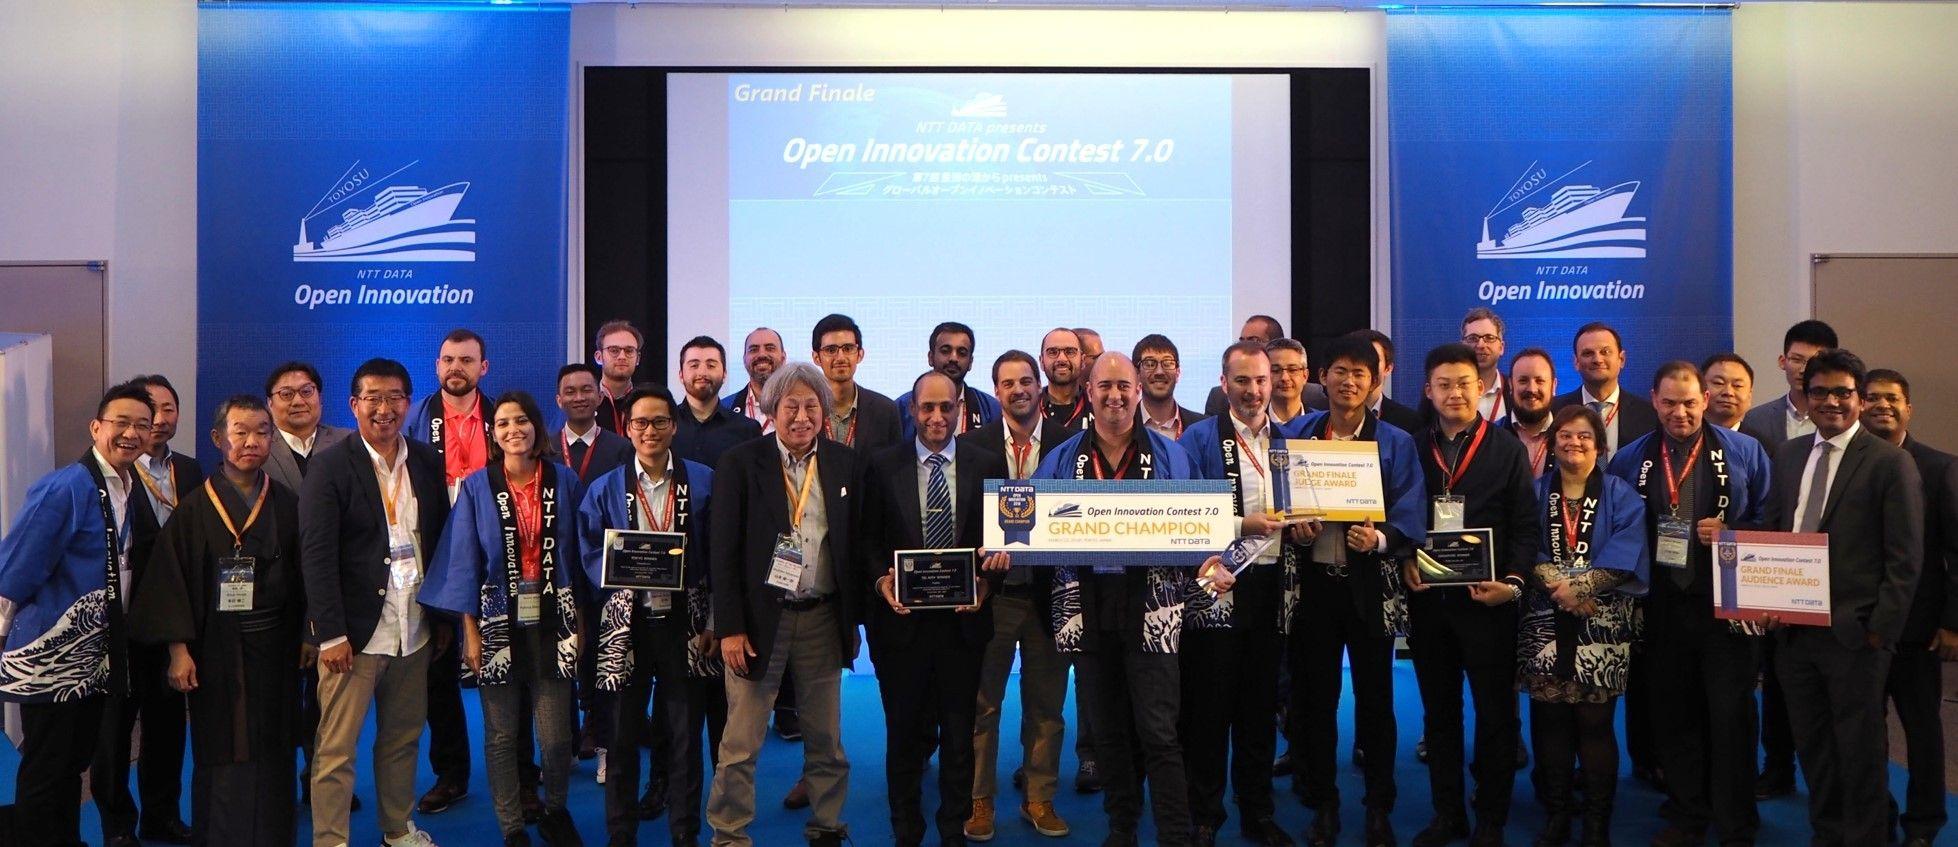 NTT Data Corporation Logo - NTT DATA Selects Gestoos as Open Innovation Contest Champion ...